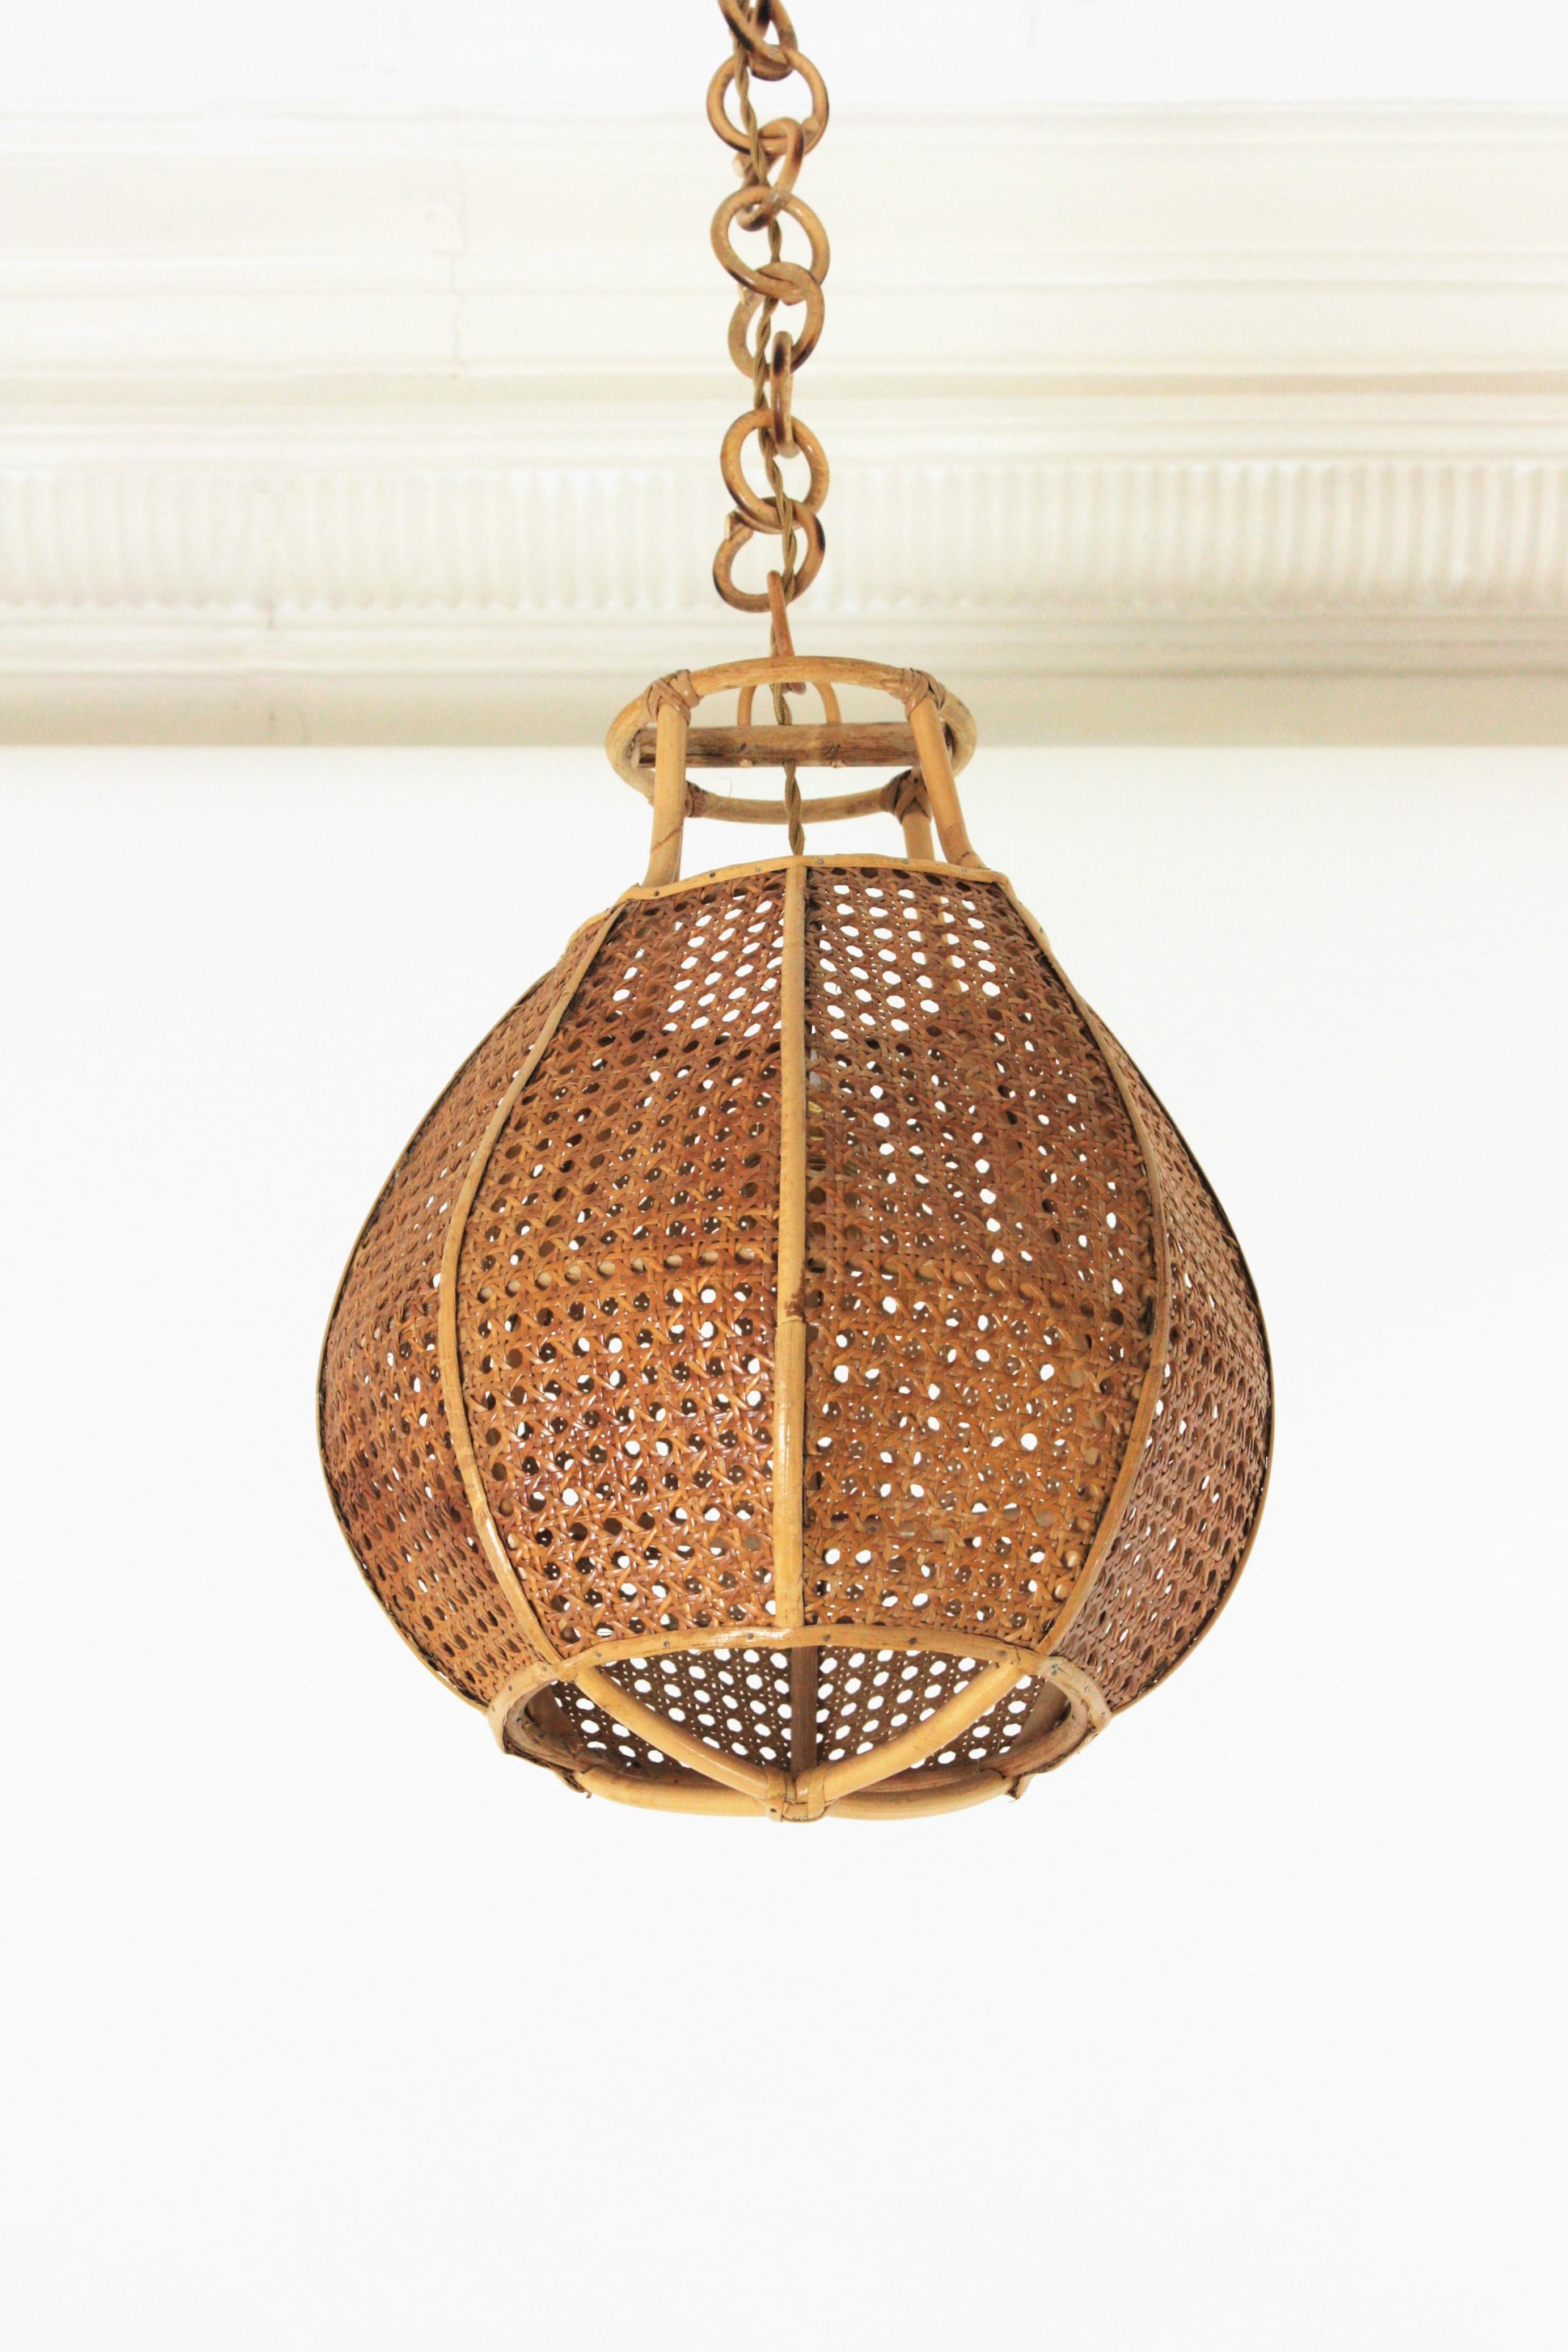 Italian Modernist Wicker Wire Rattan Globe Pendant Hanging Light For Sale 1